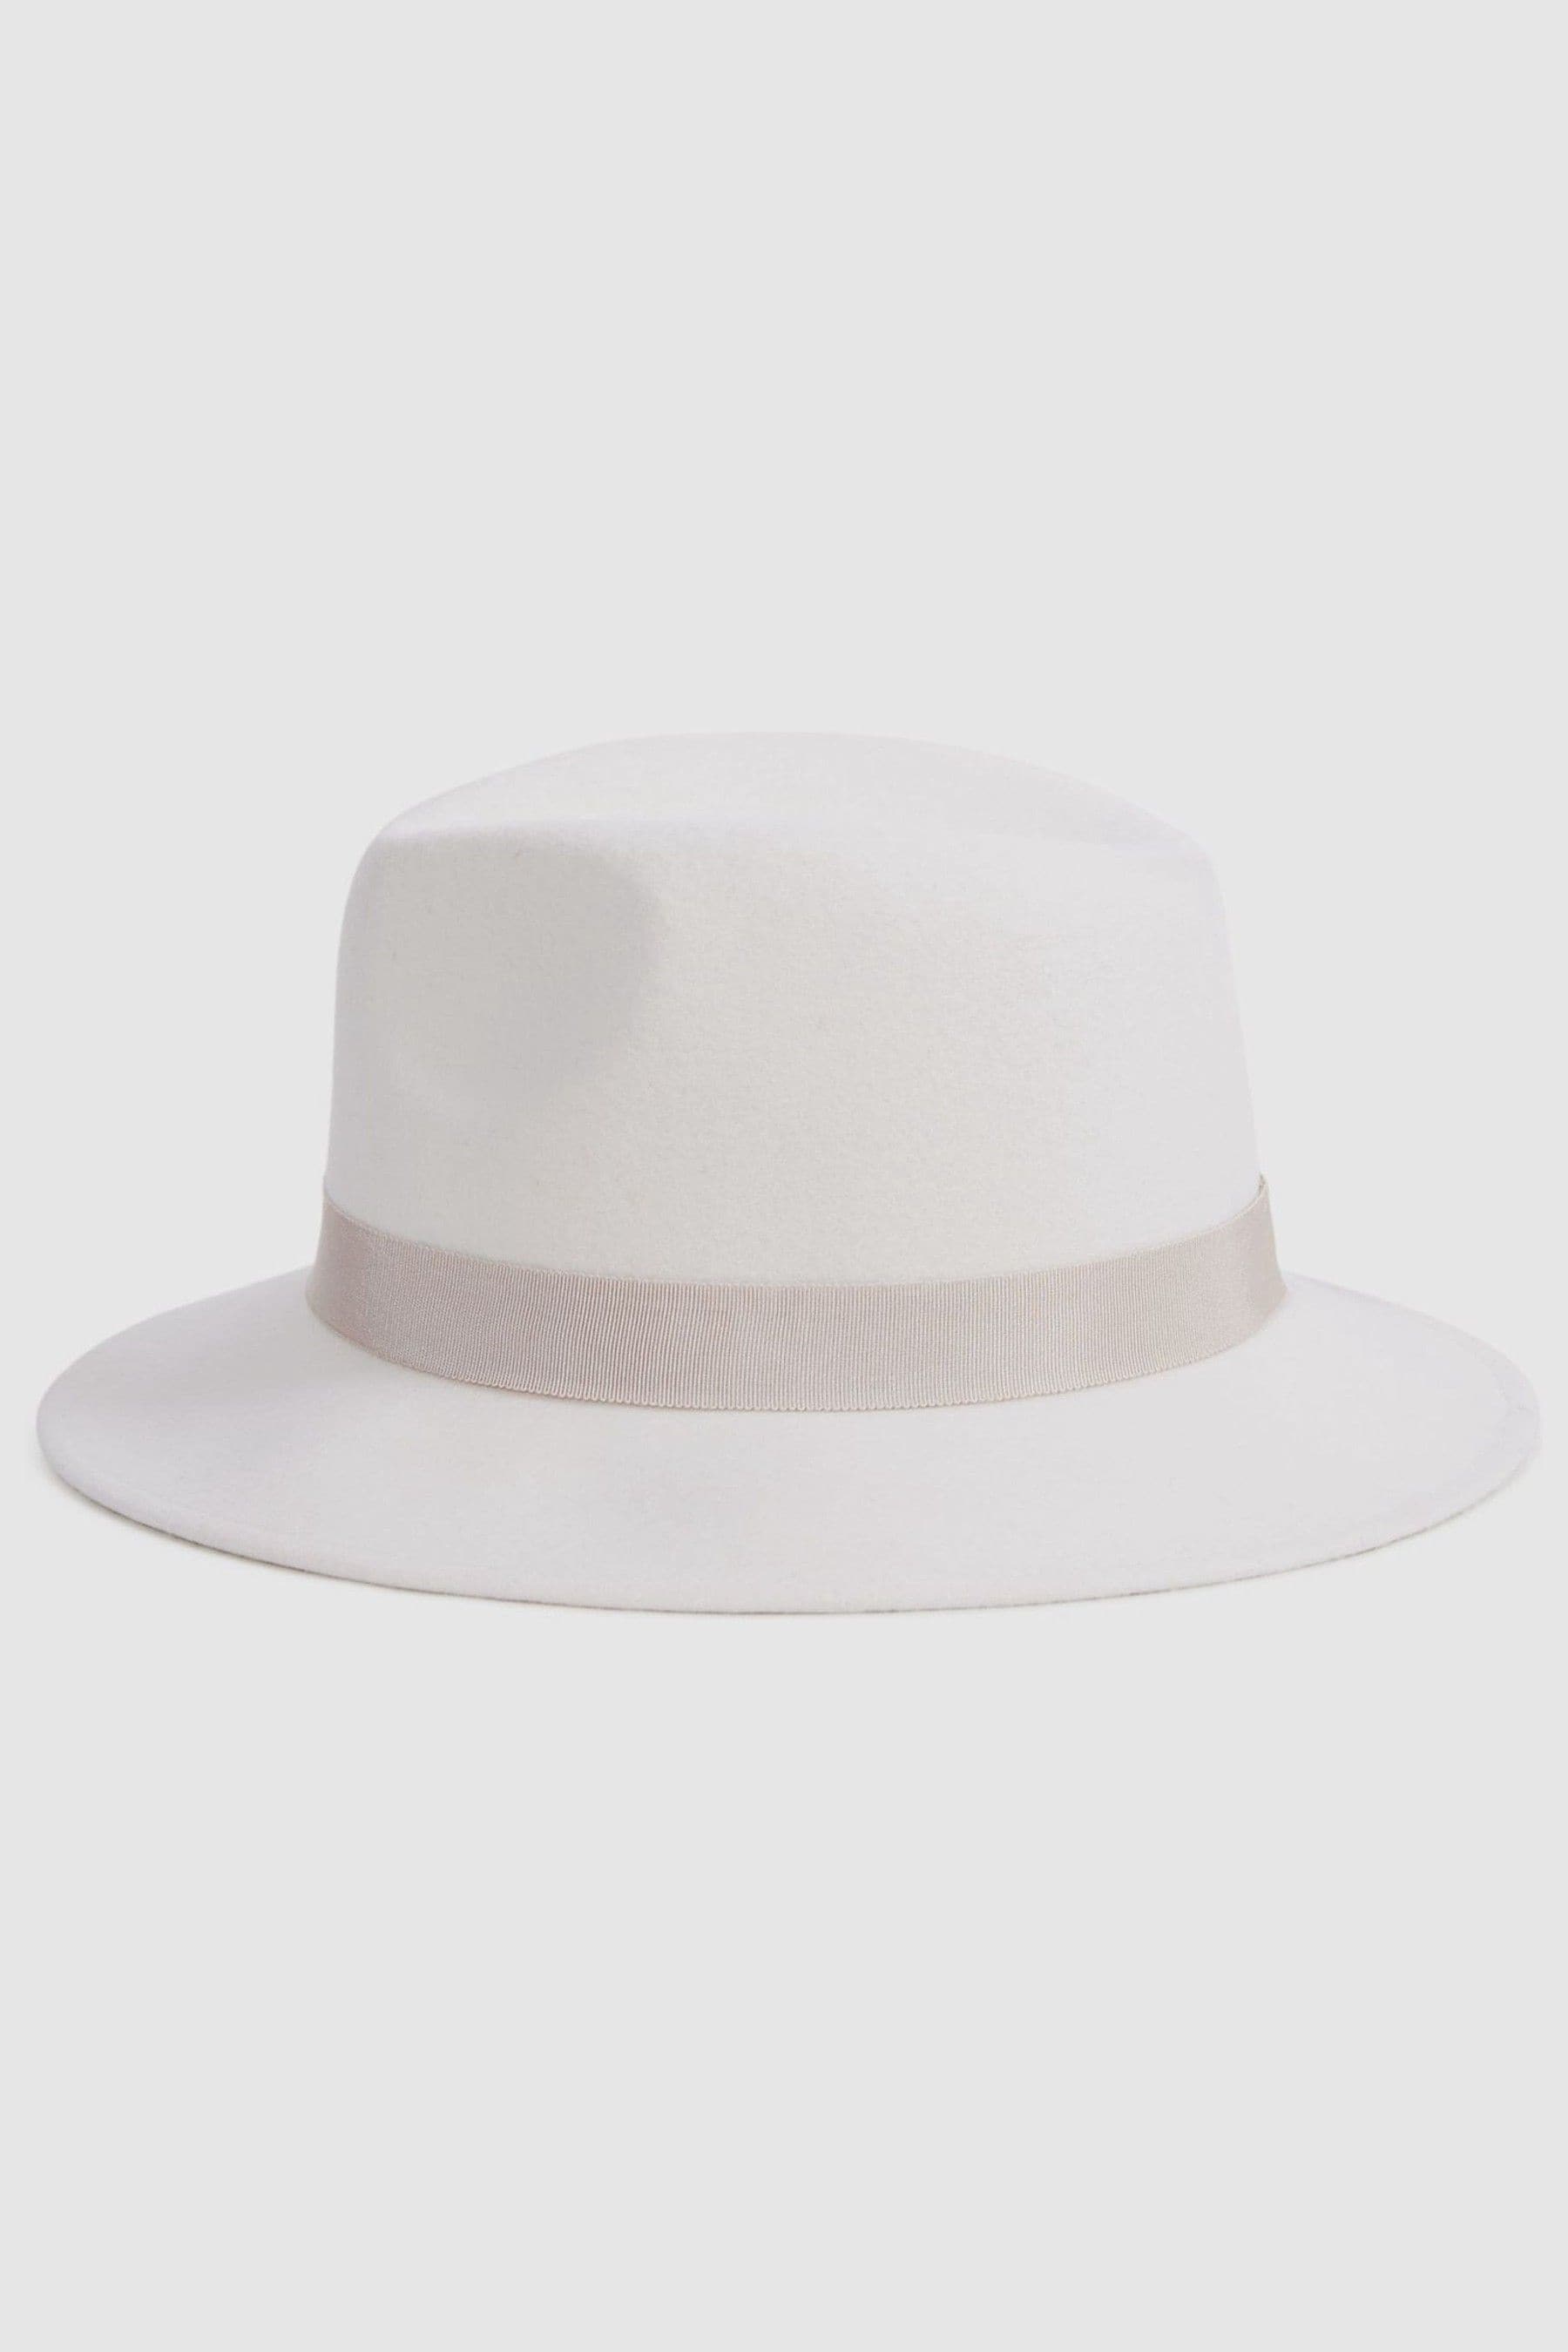 Reiss Ally - Ivory Wool Fedora Hat, S-m